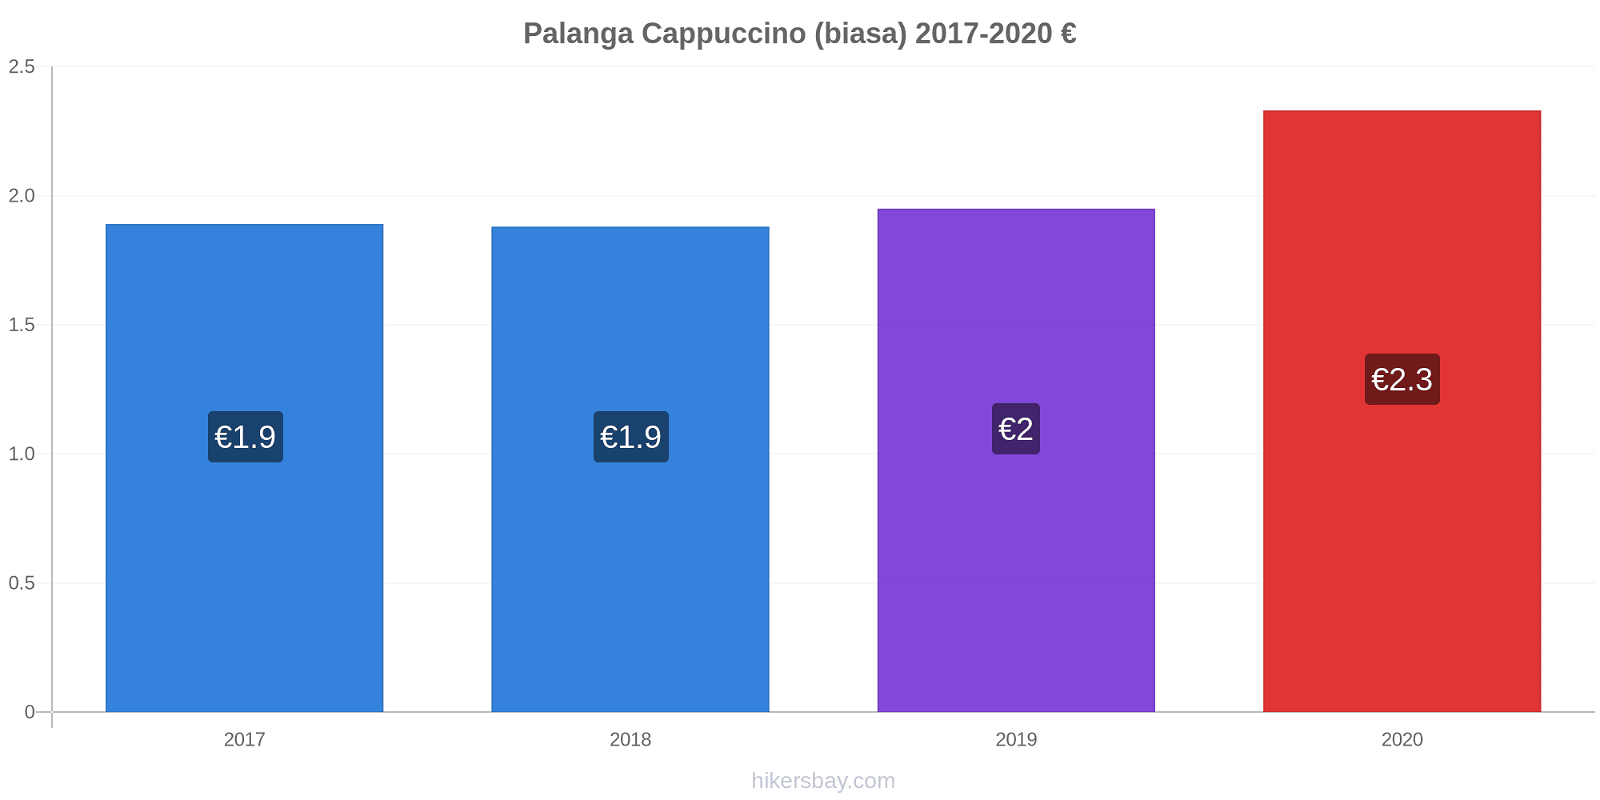 Palanga perubahan harga Cappuccino (biasa) hikersbay.com